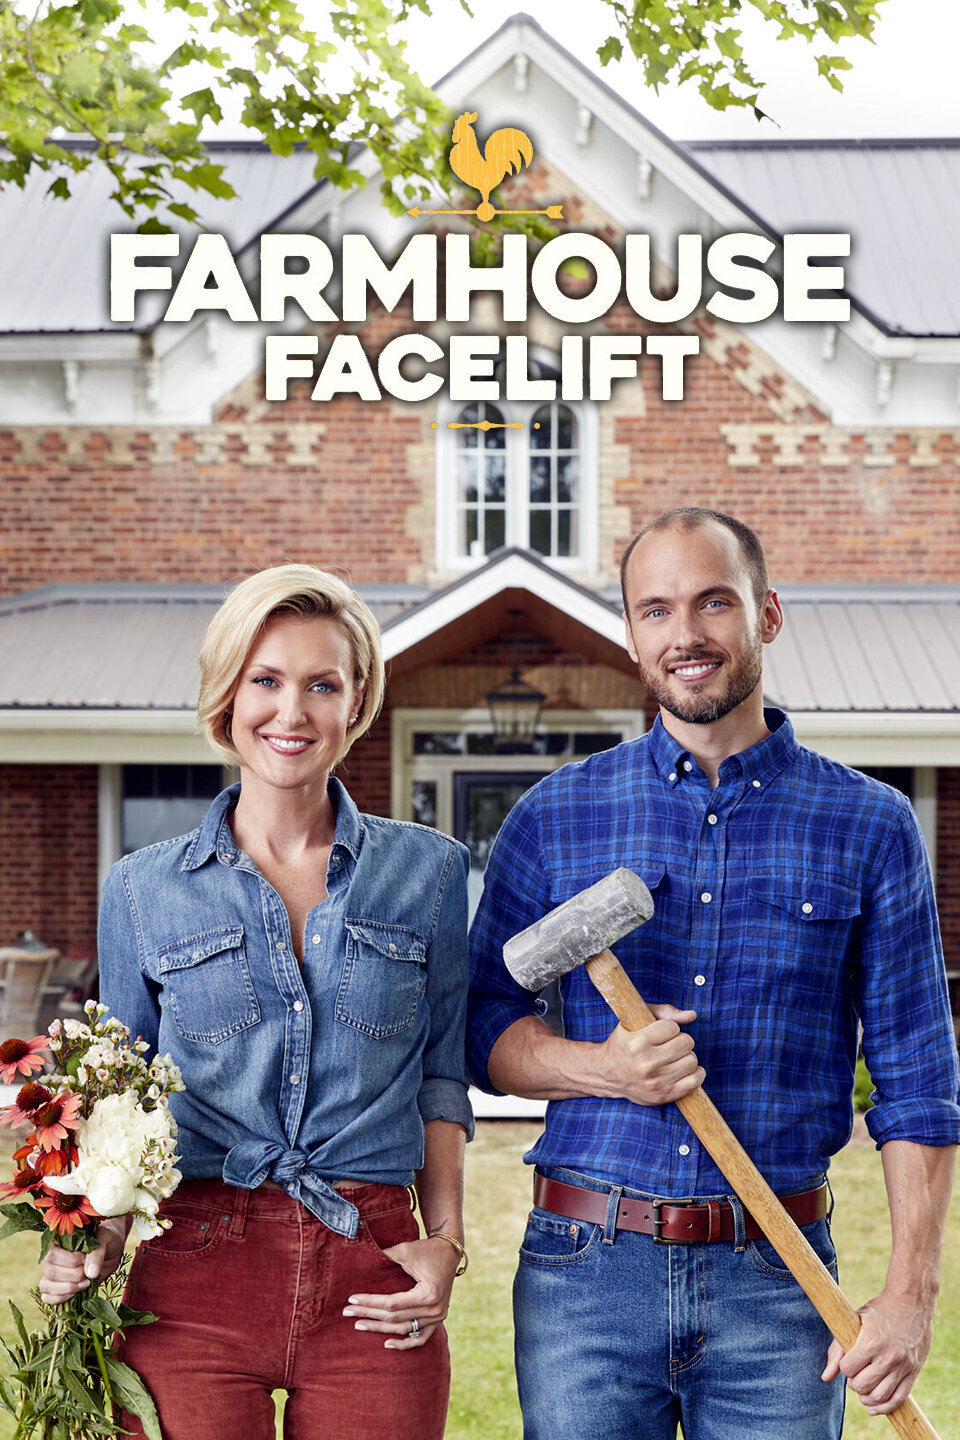 Farmhouse Facelift ne zaman